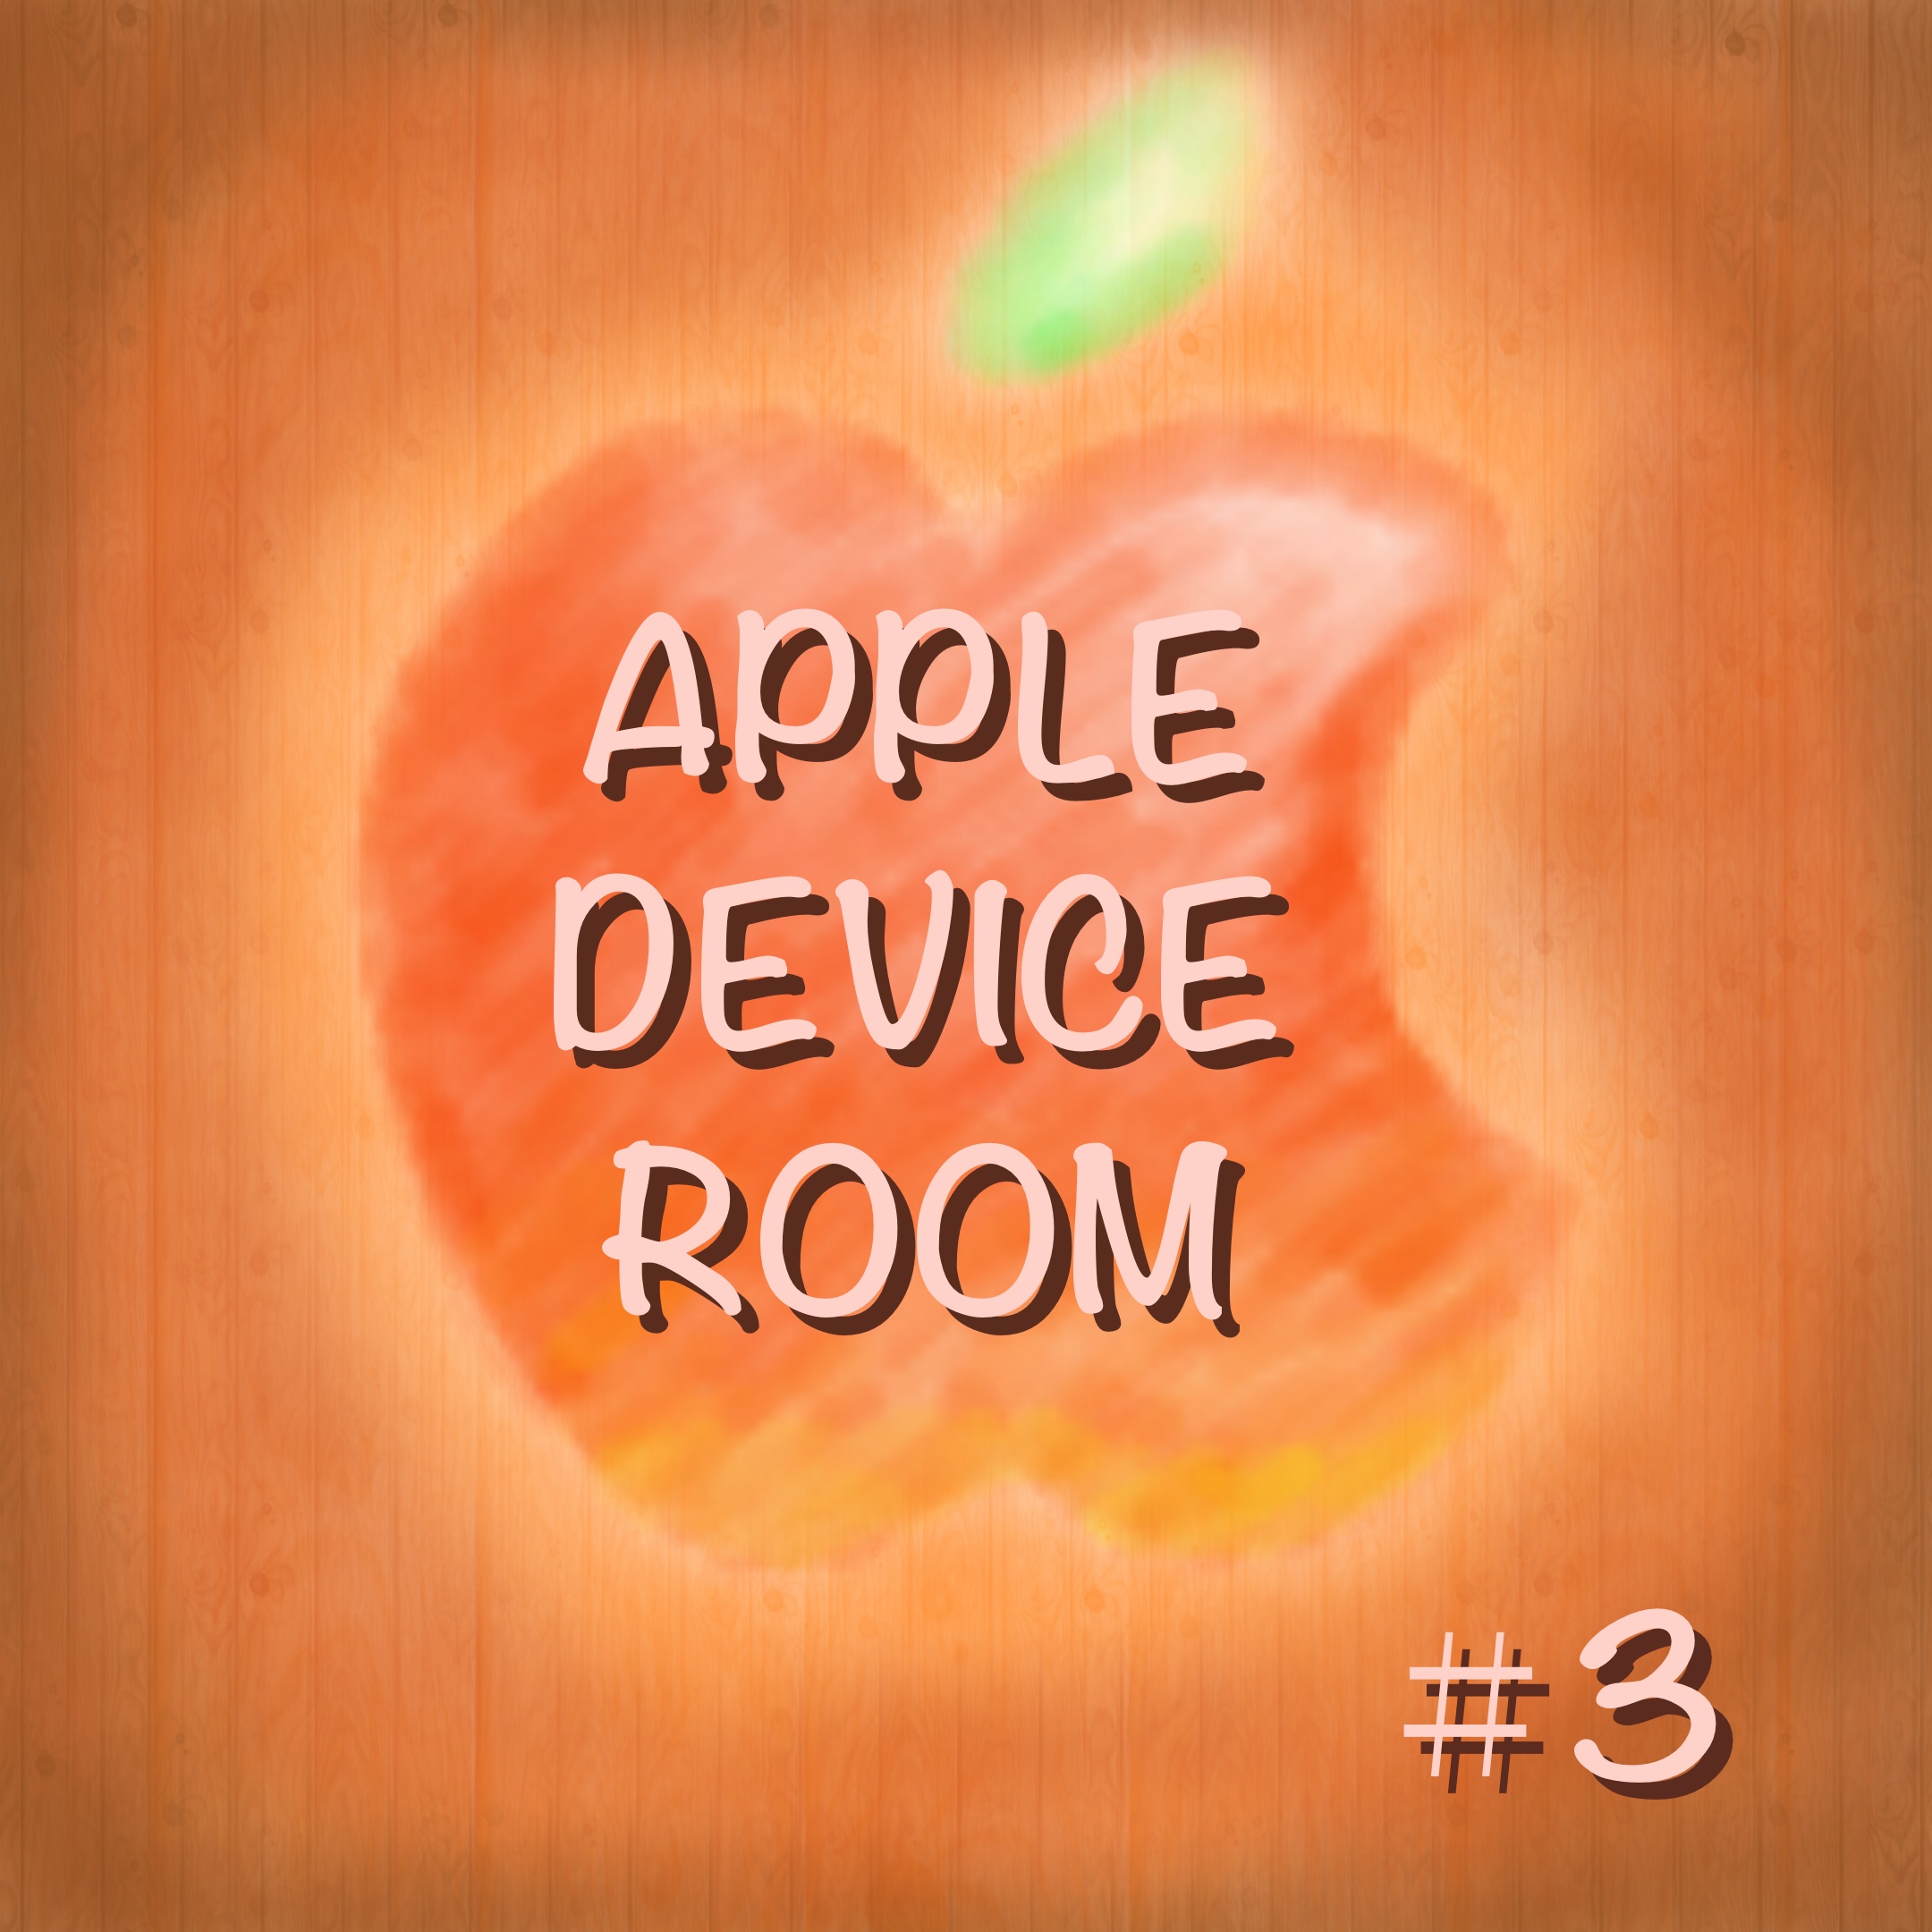 Apple device room